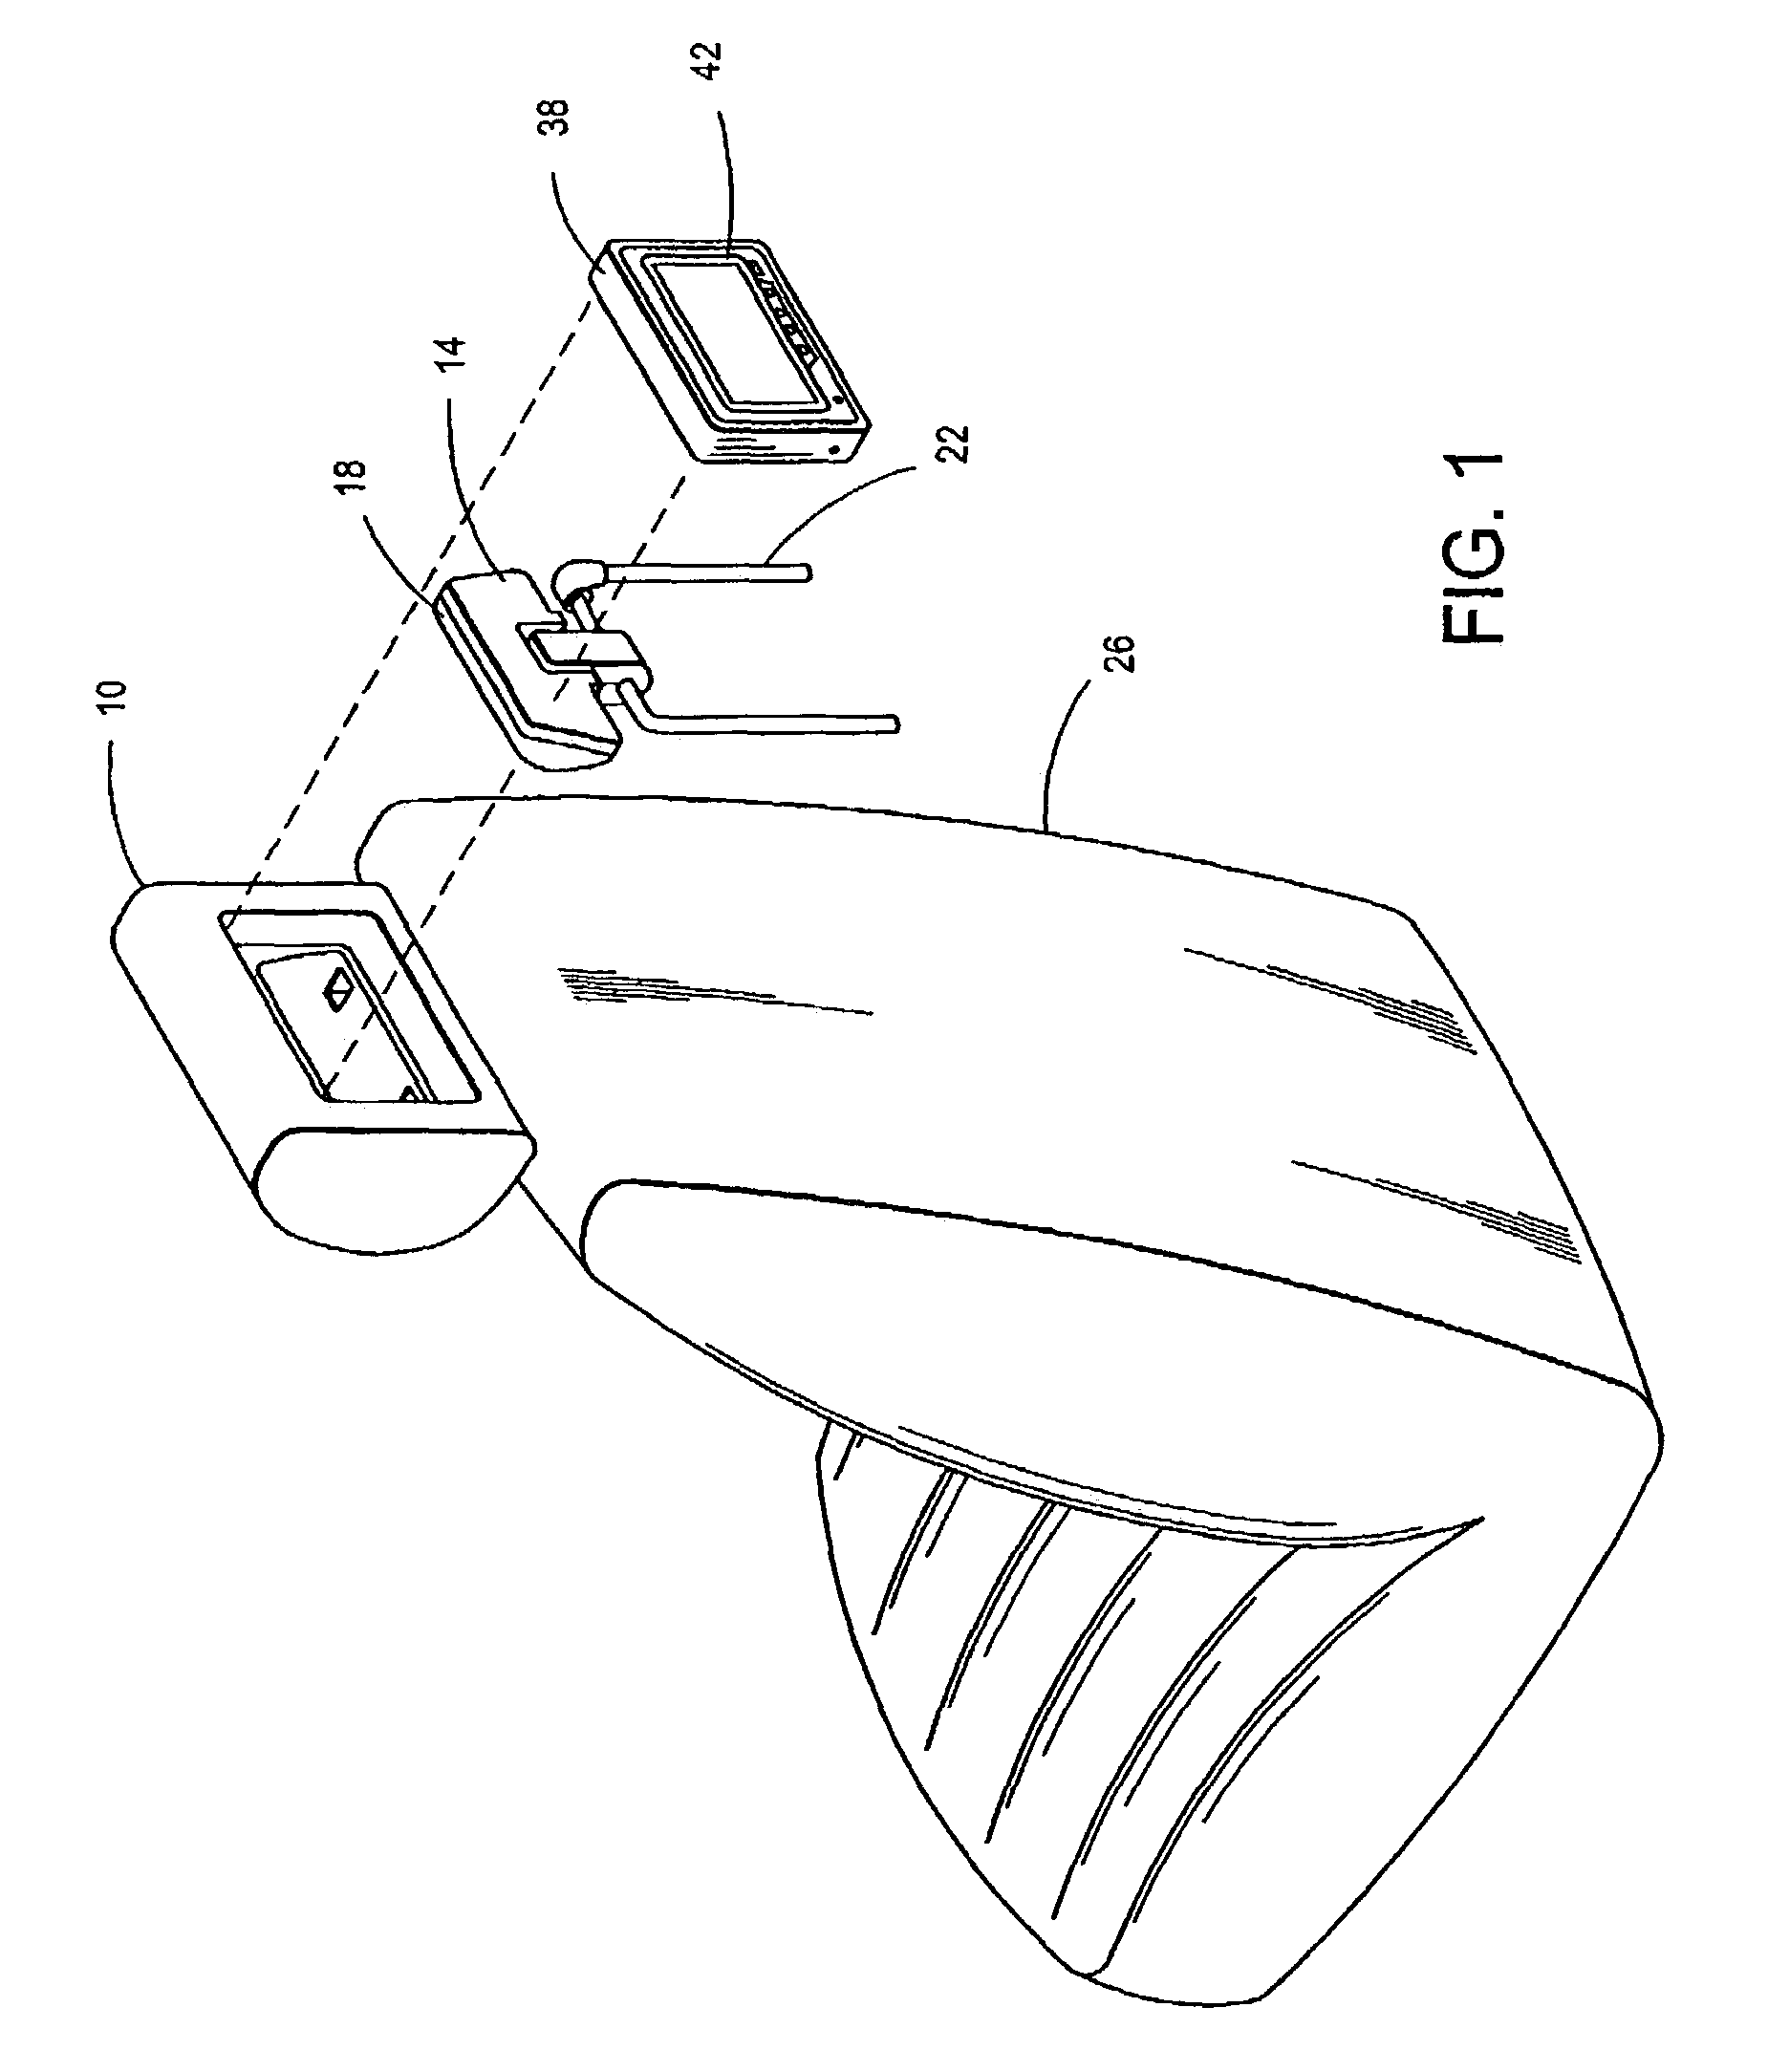 Headrest mounted video display